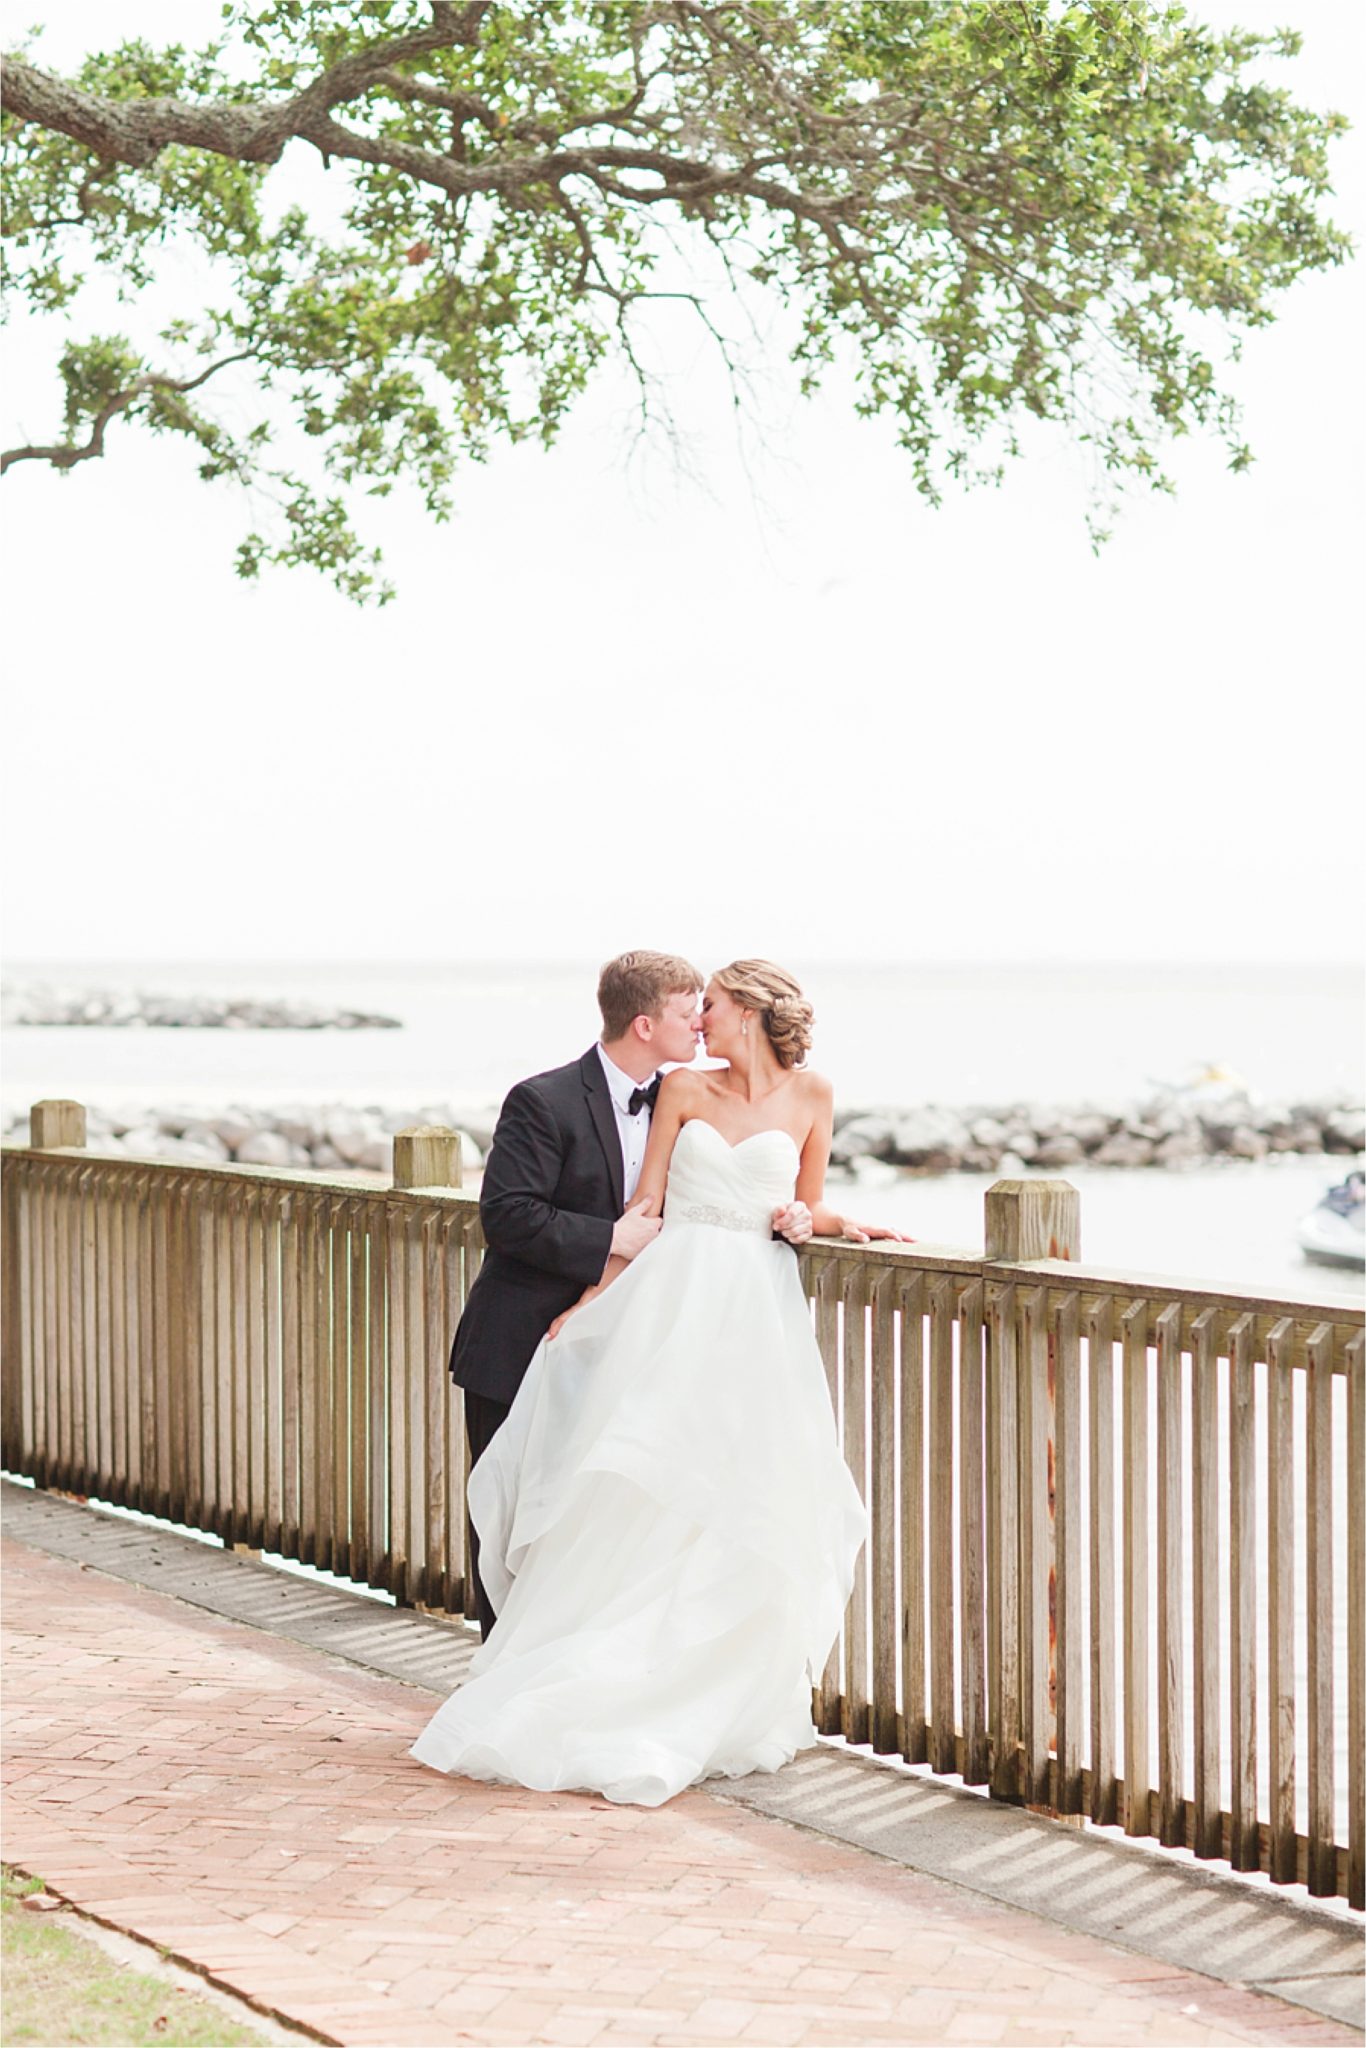 Classy Light Blue Wedding-Point Clear, Alabama Wedding Photographer-Wedding dress-Wedding gown-Bride and groom